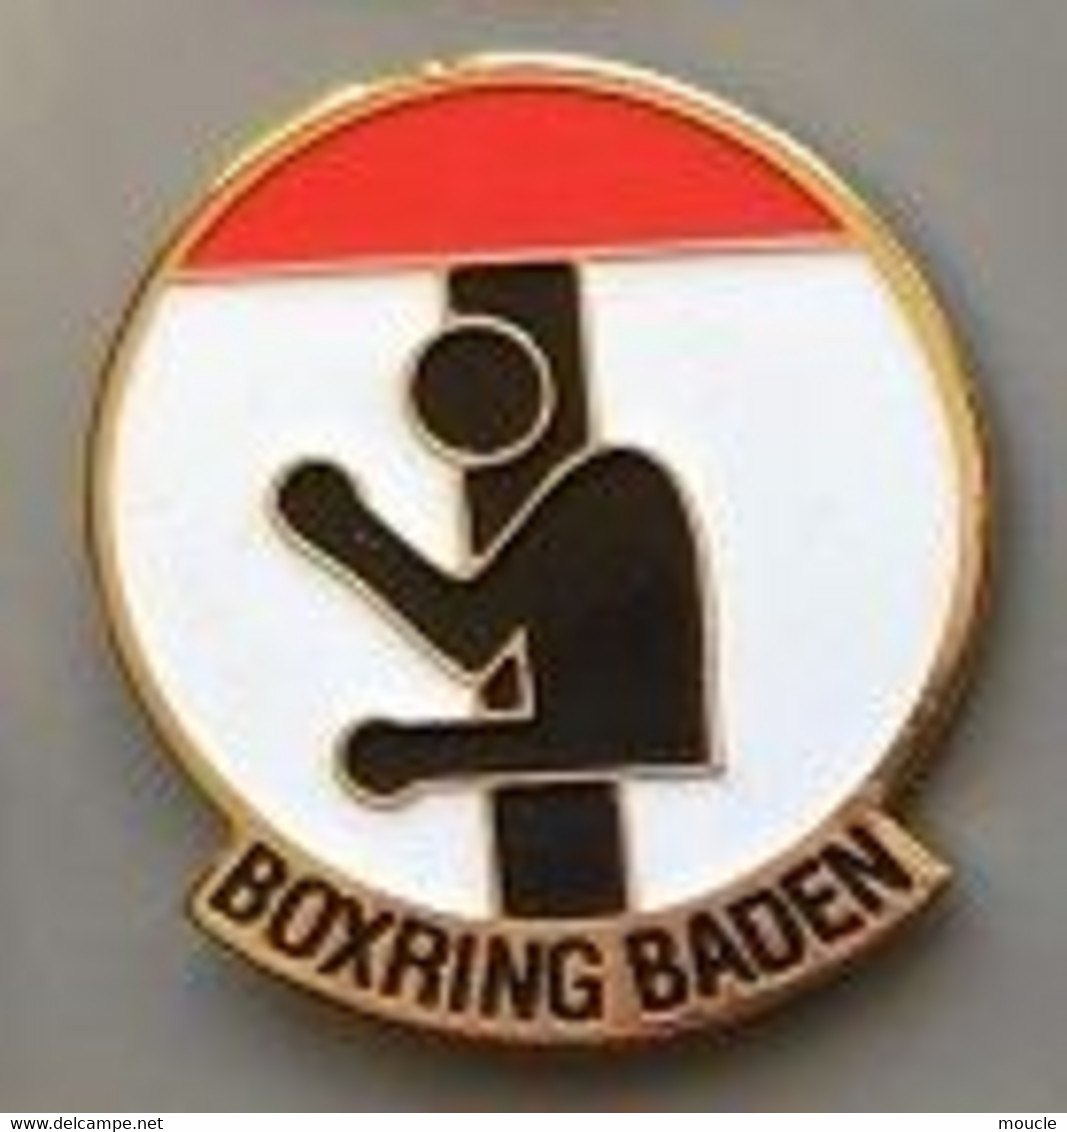 BOXRING BADEN - SCHWEIZ - BOXING CLUB - SUISSE - BOXEUR - GANTS - RING - SWITZERLAND - SVIZZERA - BOXING - BOXEN - (30) - Boksen